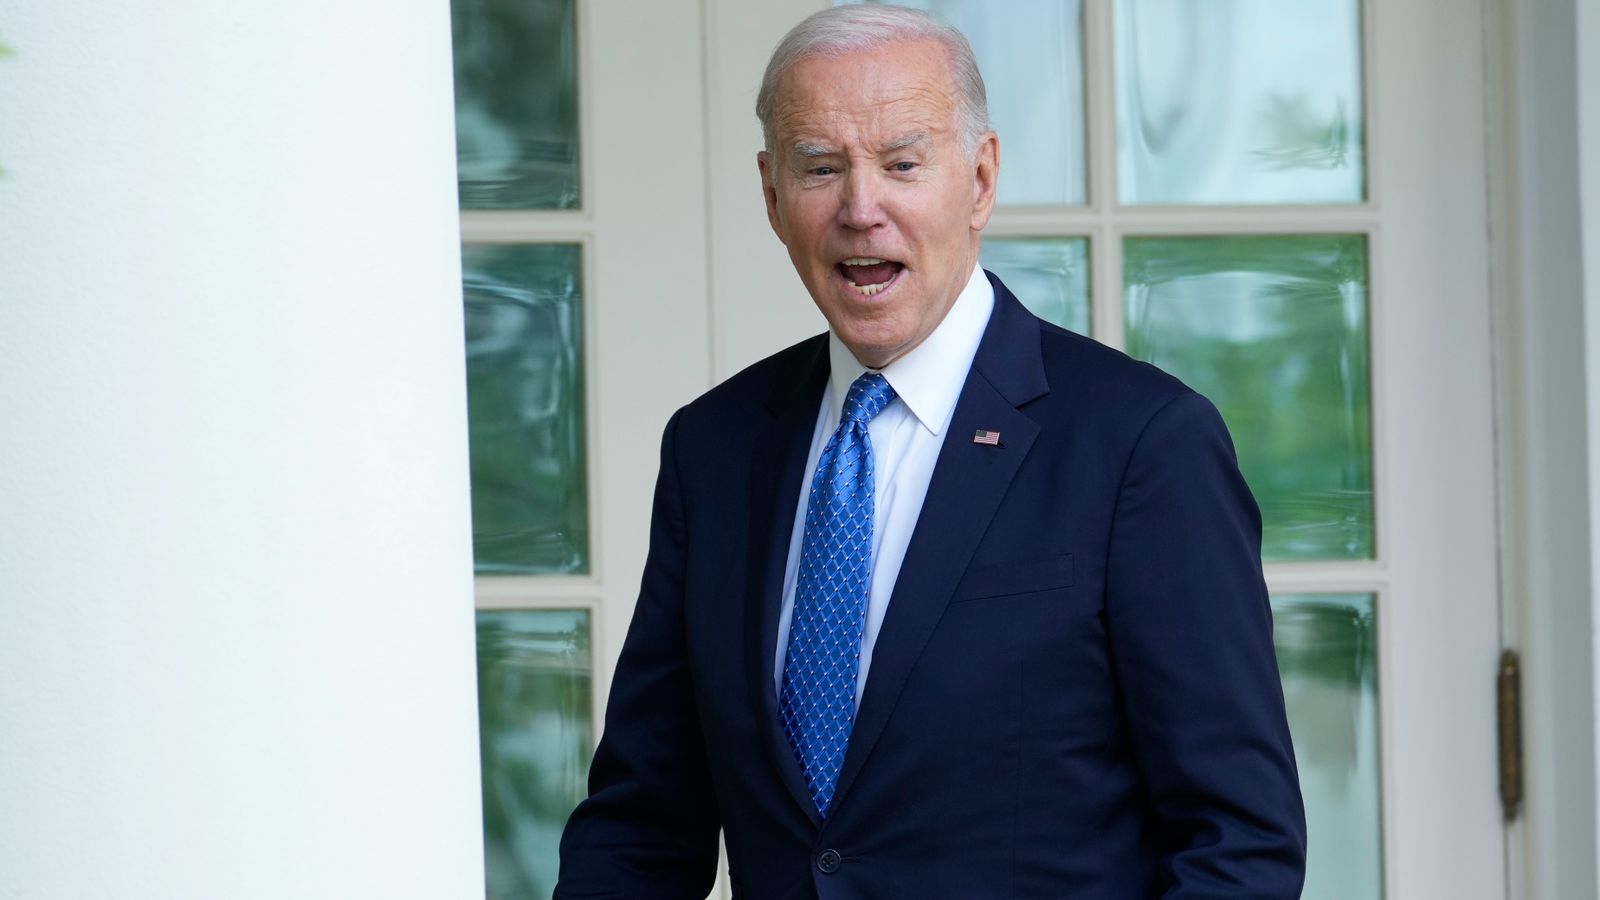 Joe Biden tells Sky News he will run for re-election